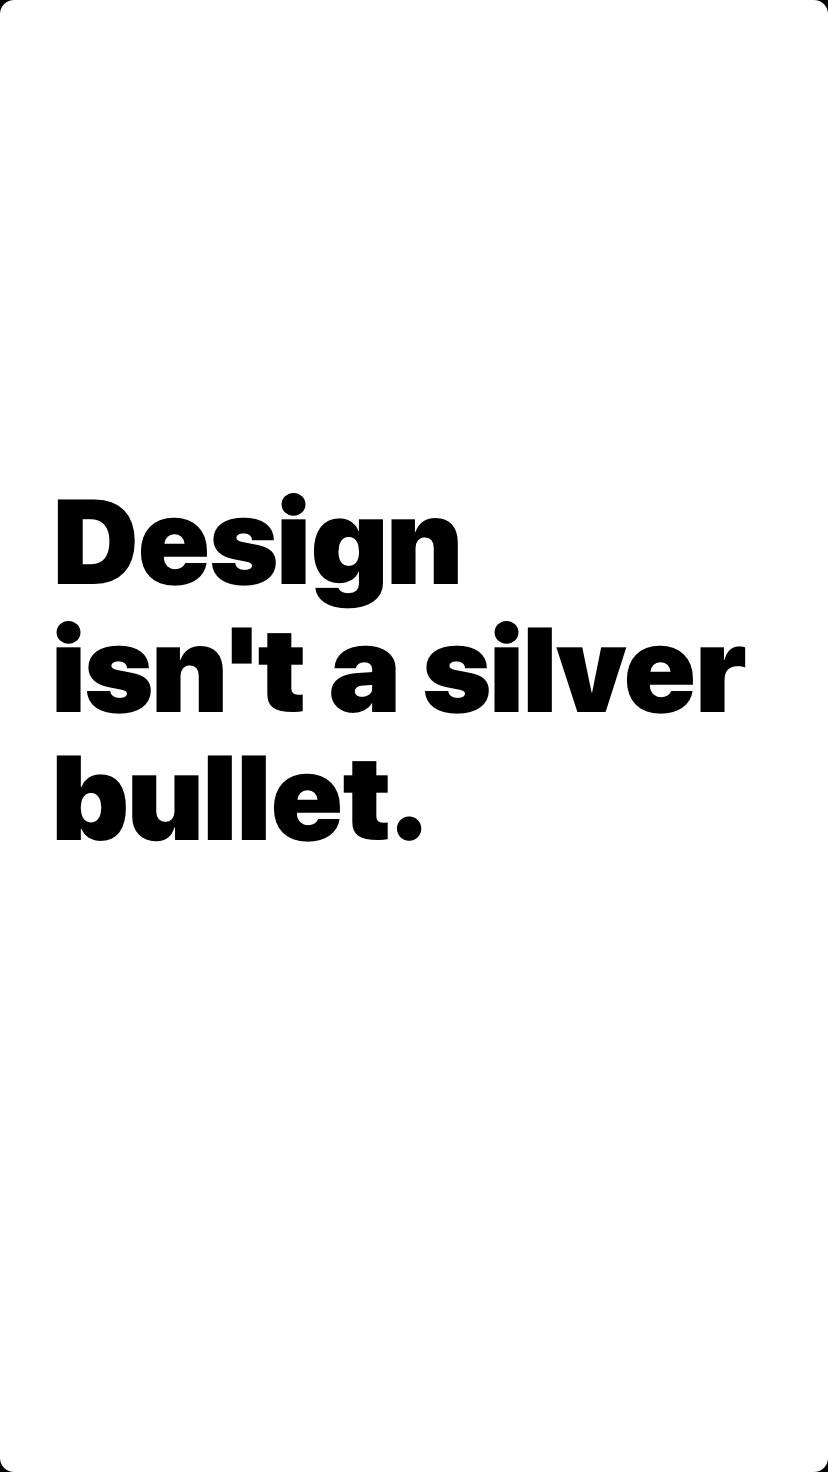 Design isn't a silver bullet.